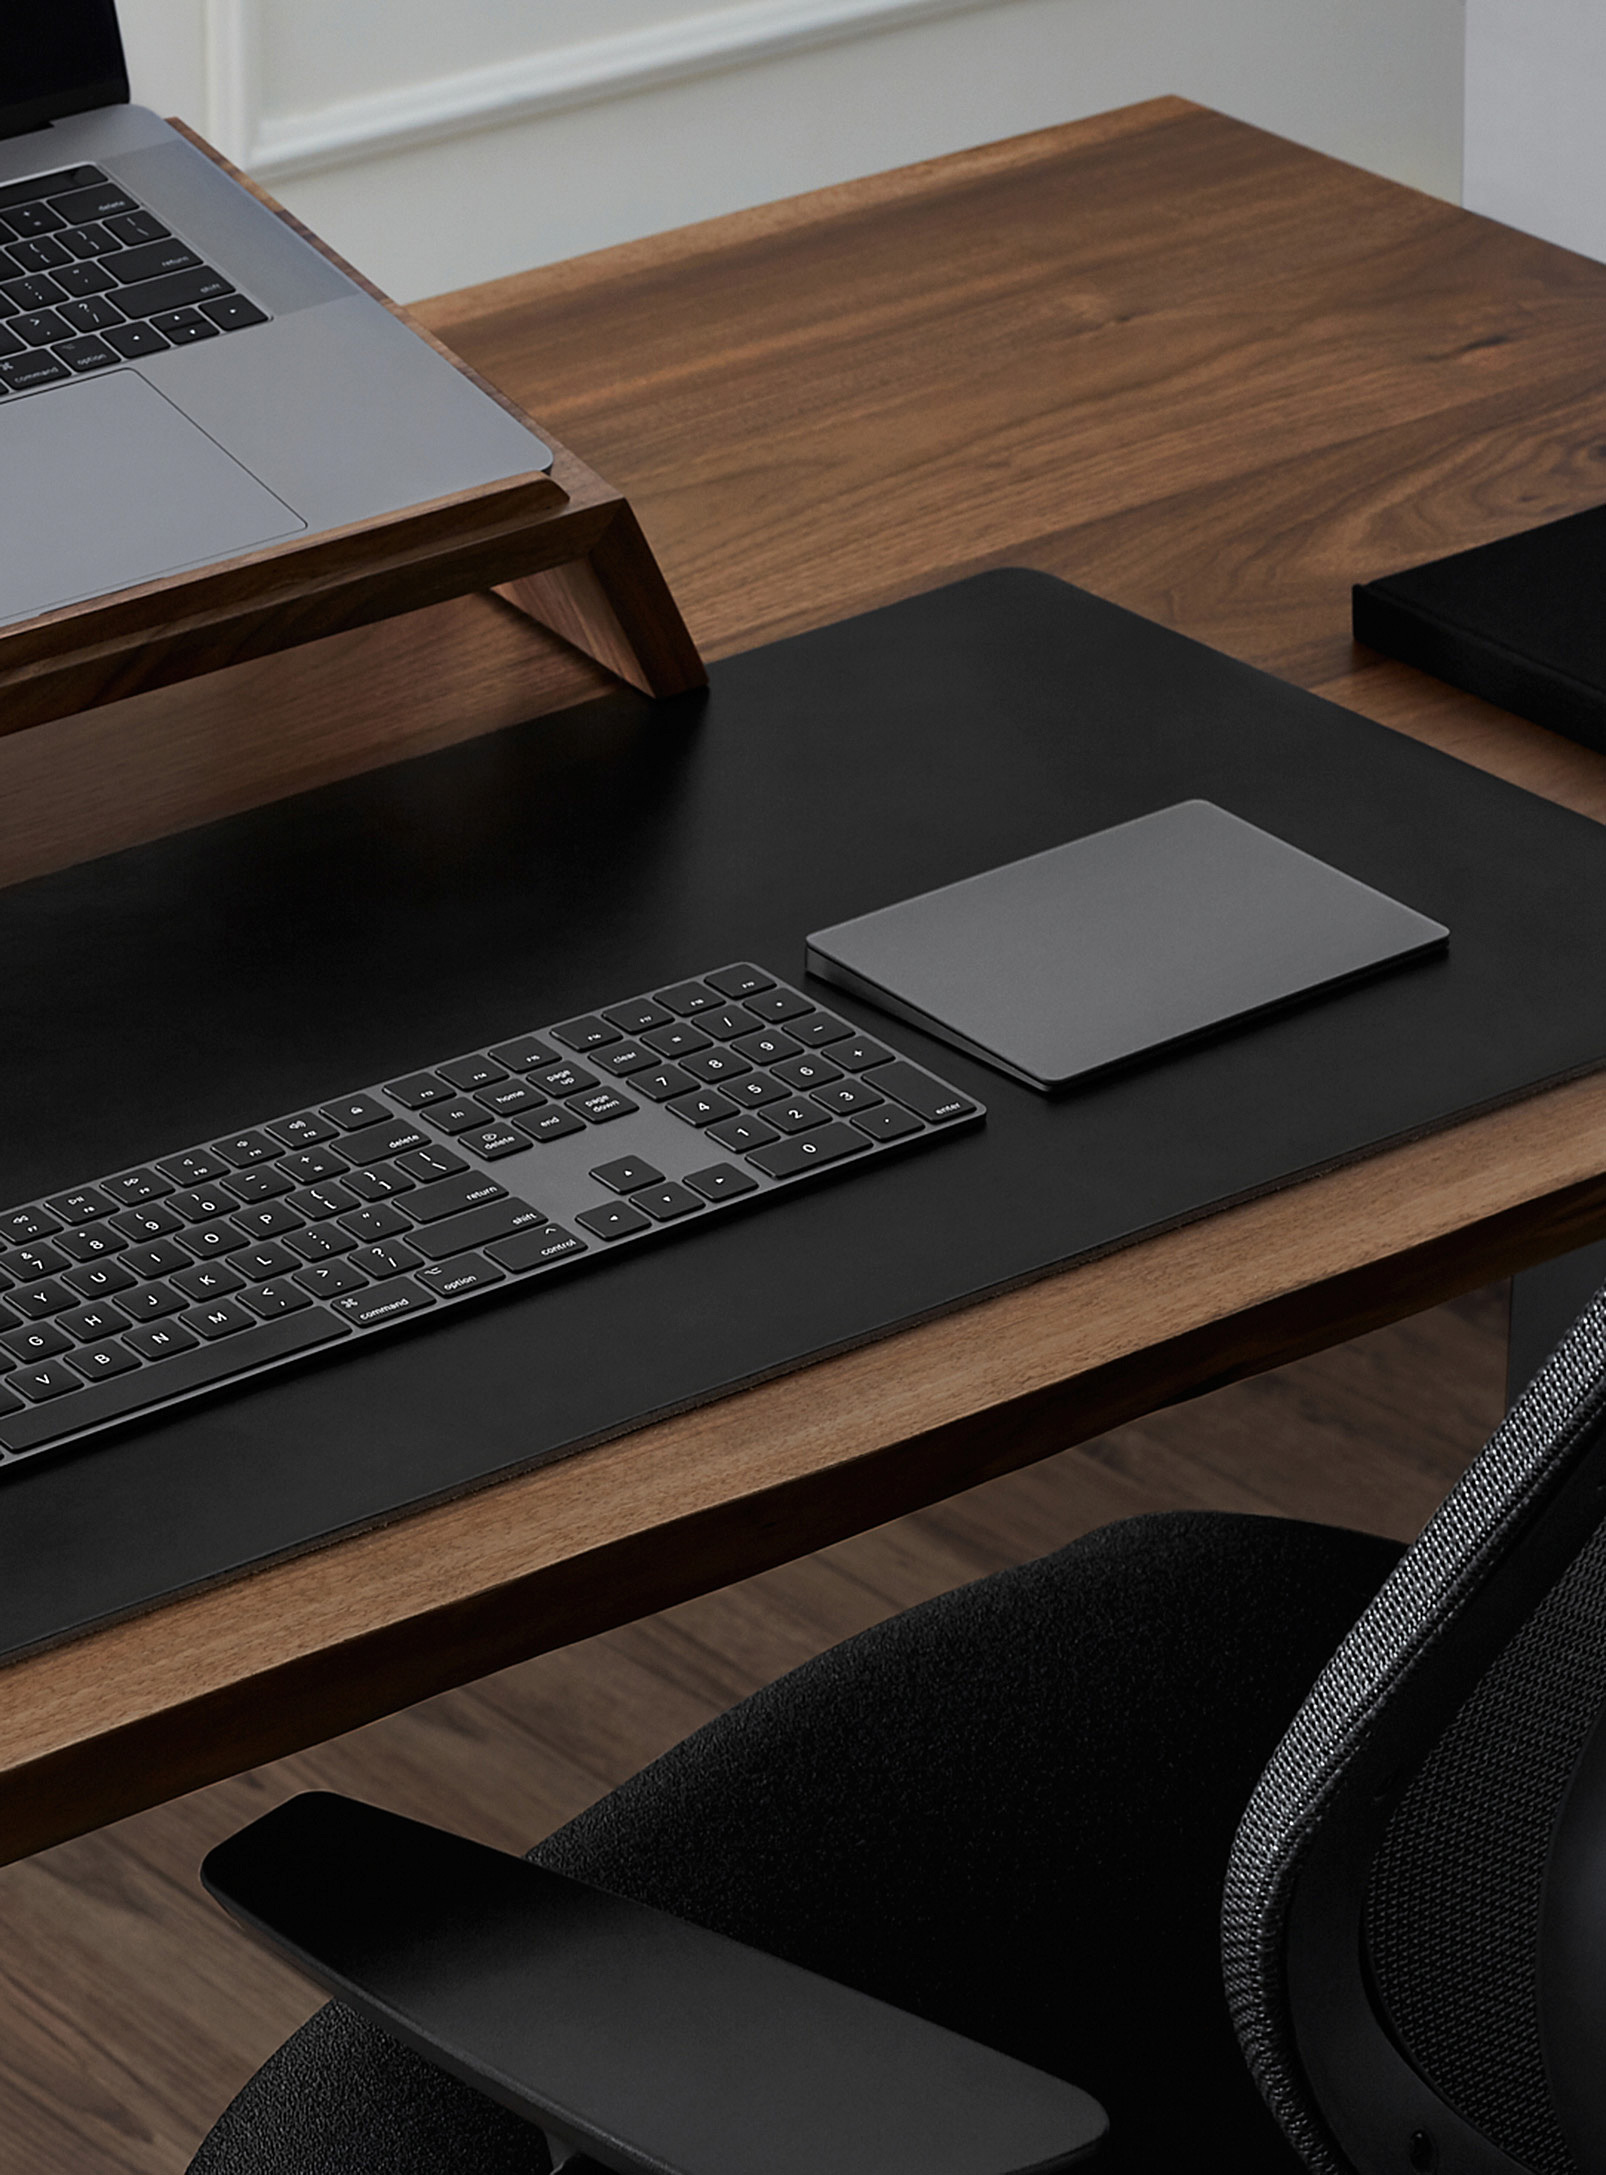 Ergonofis Leather Desk Pad In Black